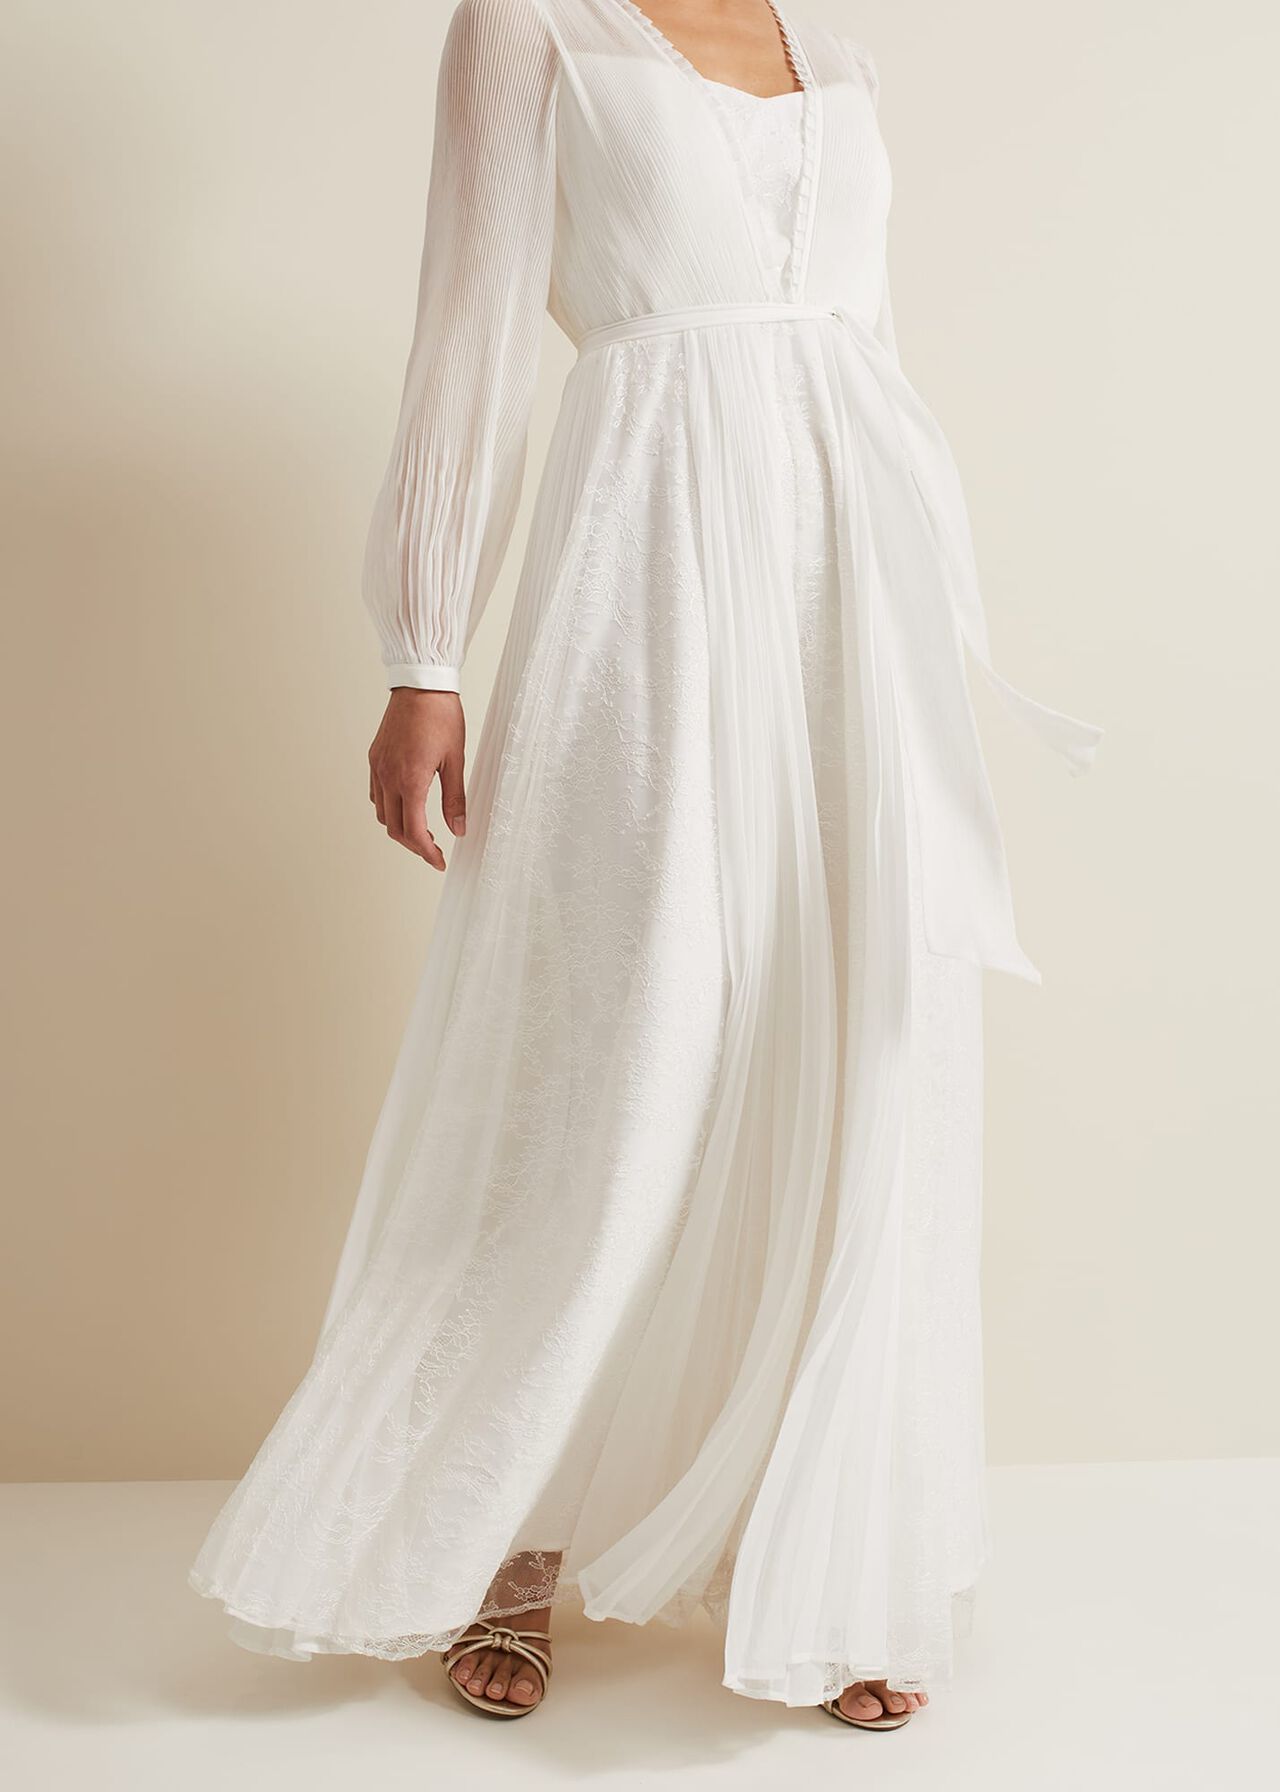 Mariana Pleated Lace Wedding Dress